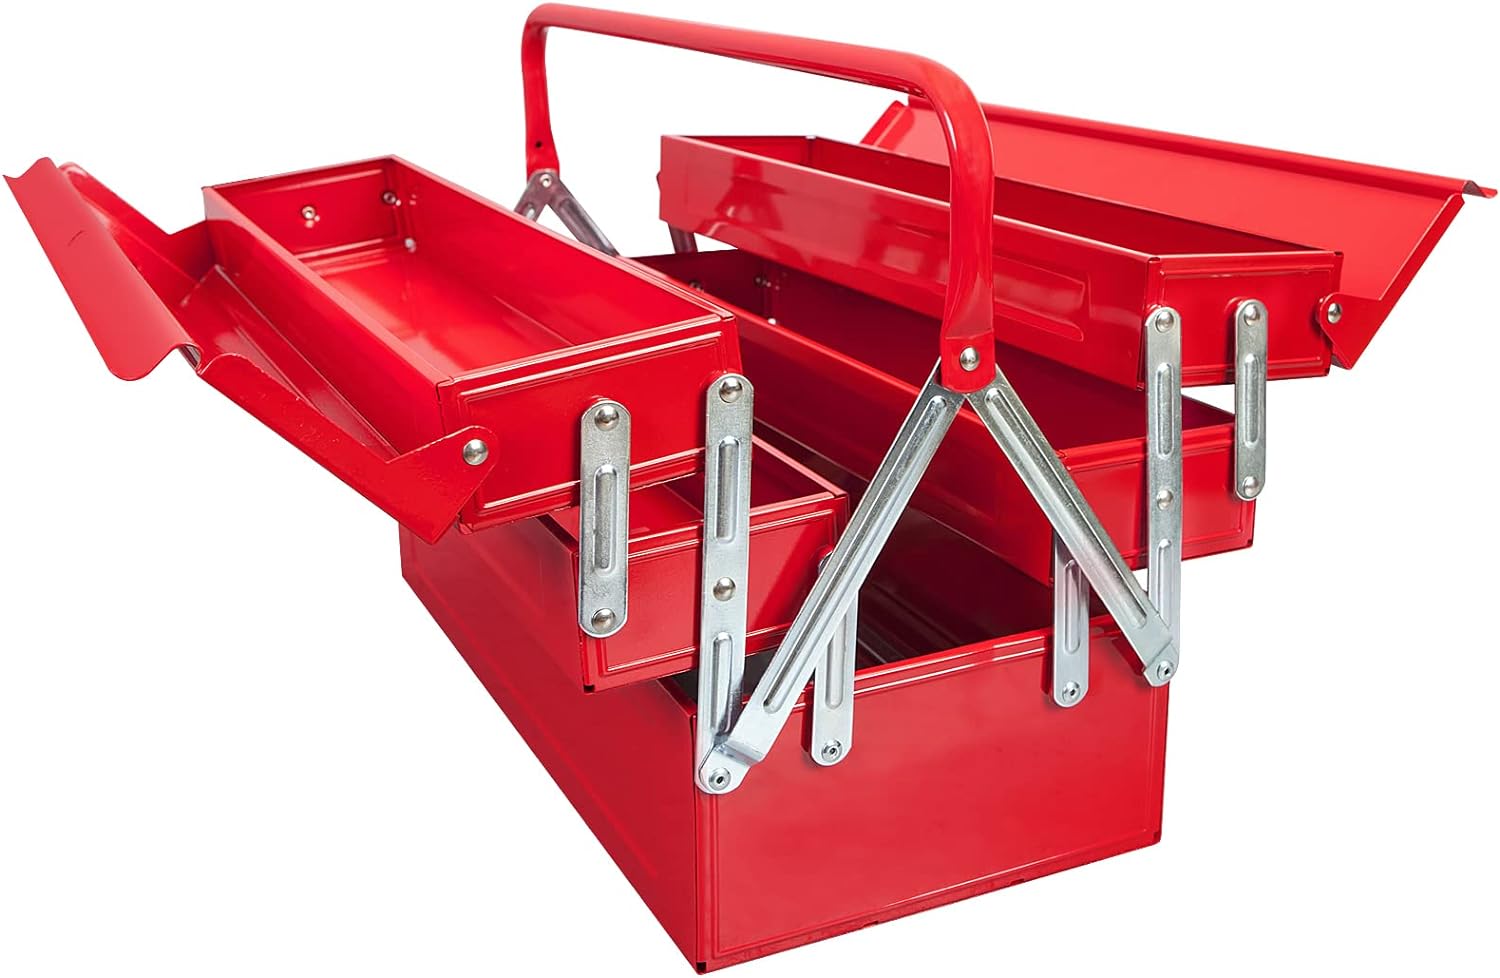 BIG RED 18 Tool Box,Portable Steel/Metal Locking Toolbox